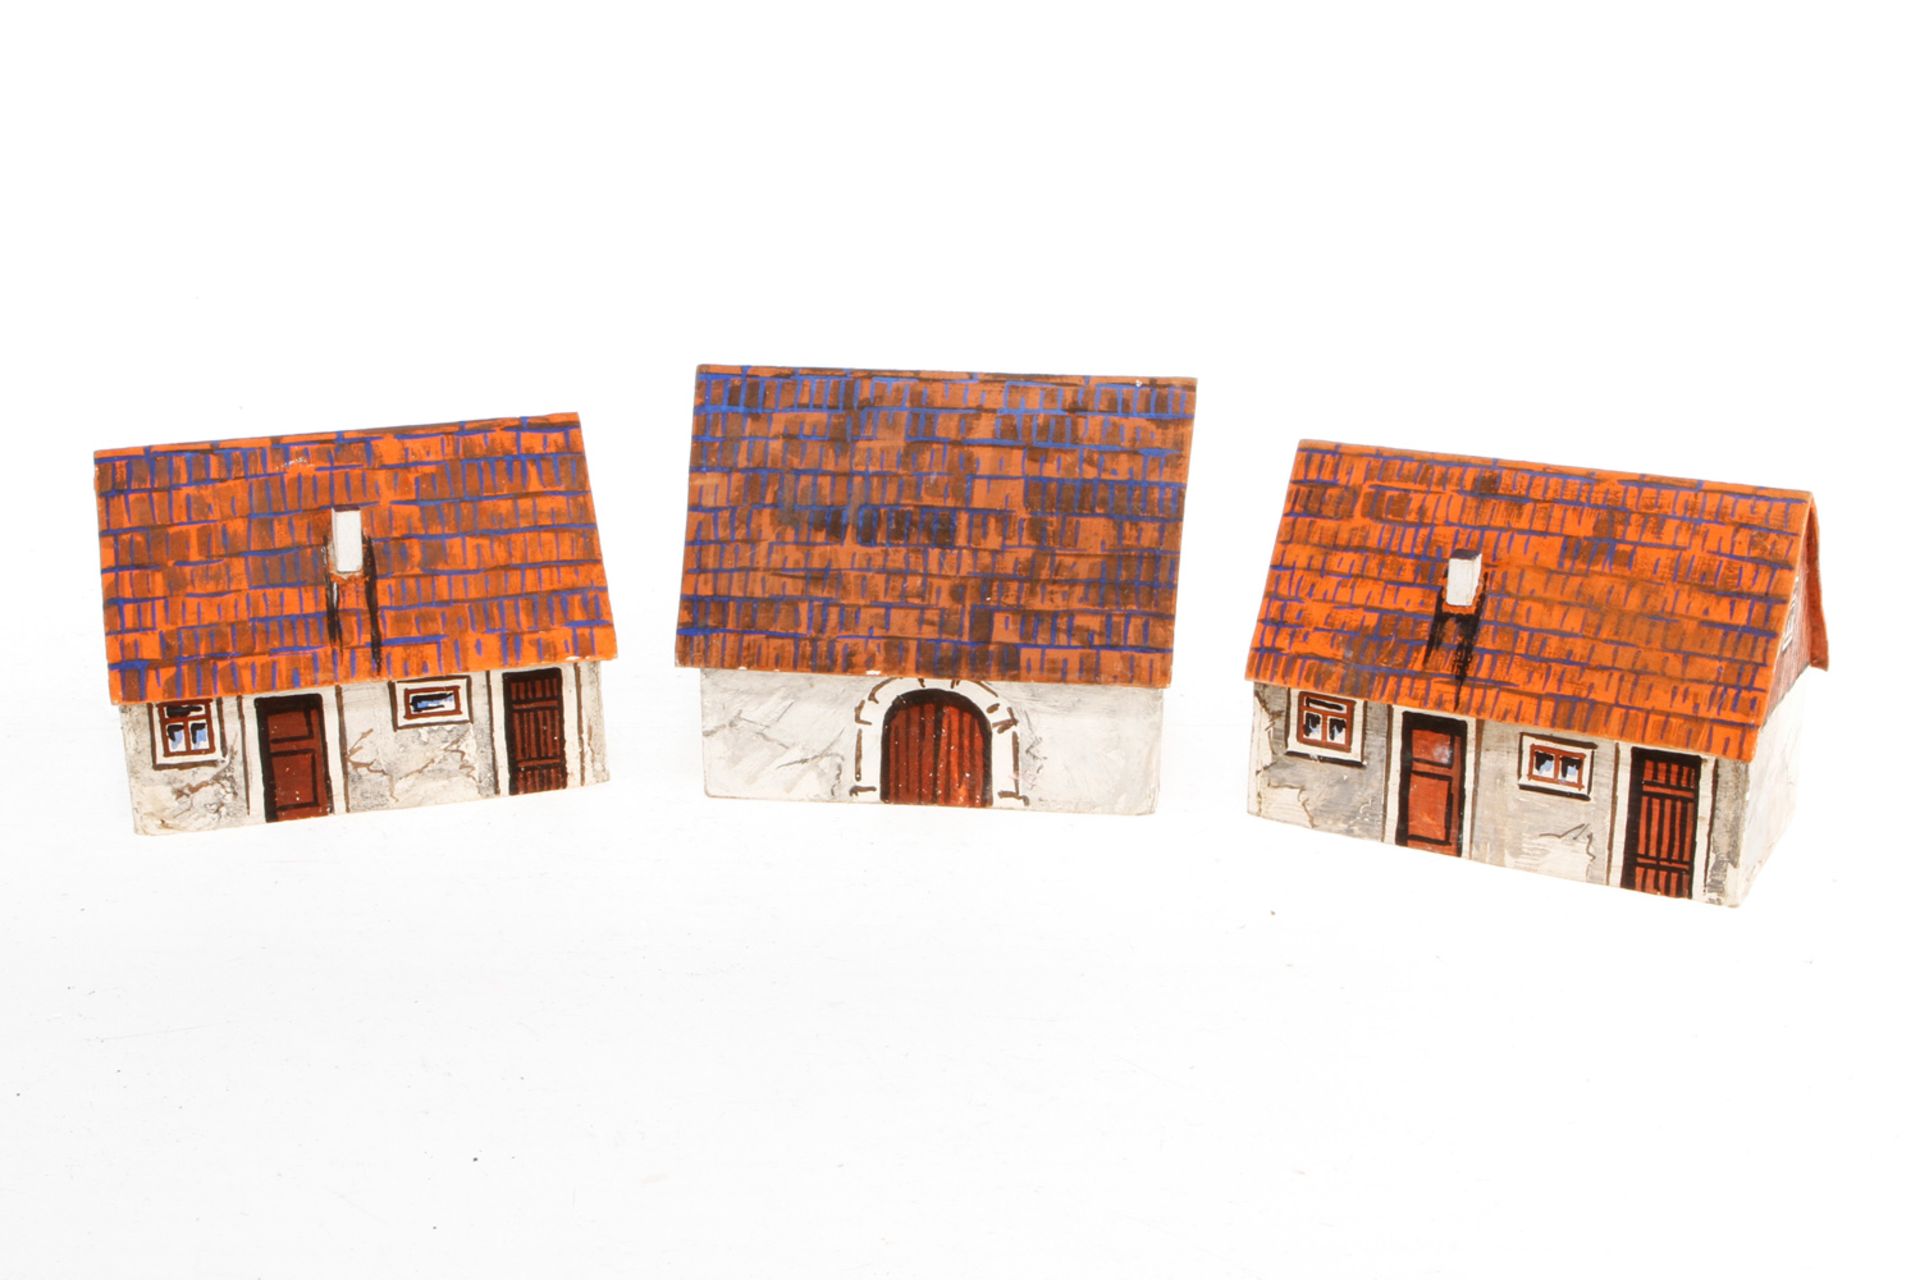 3 Erzgebirge Häuser, Holz/Pappe, handlackiert, L 12